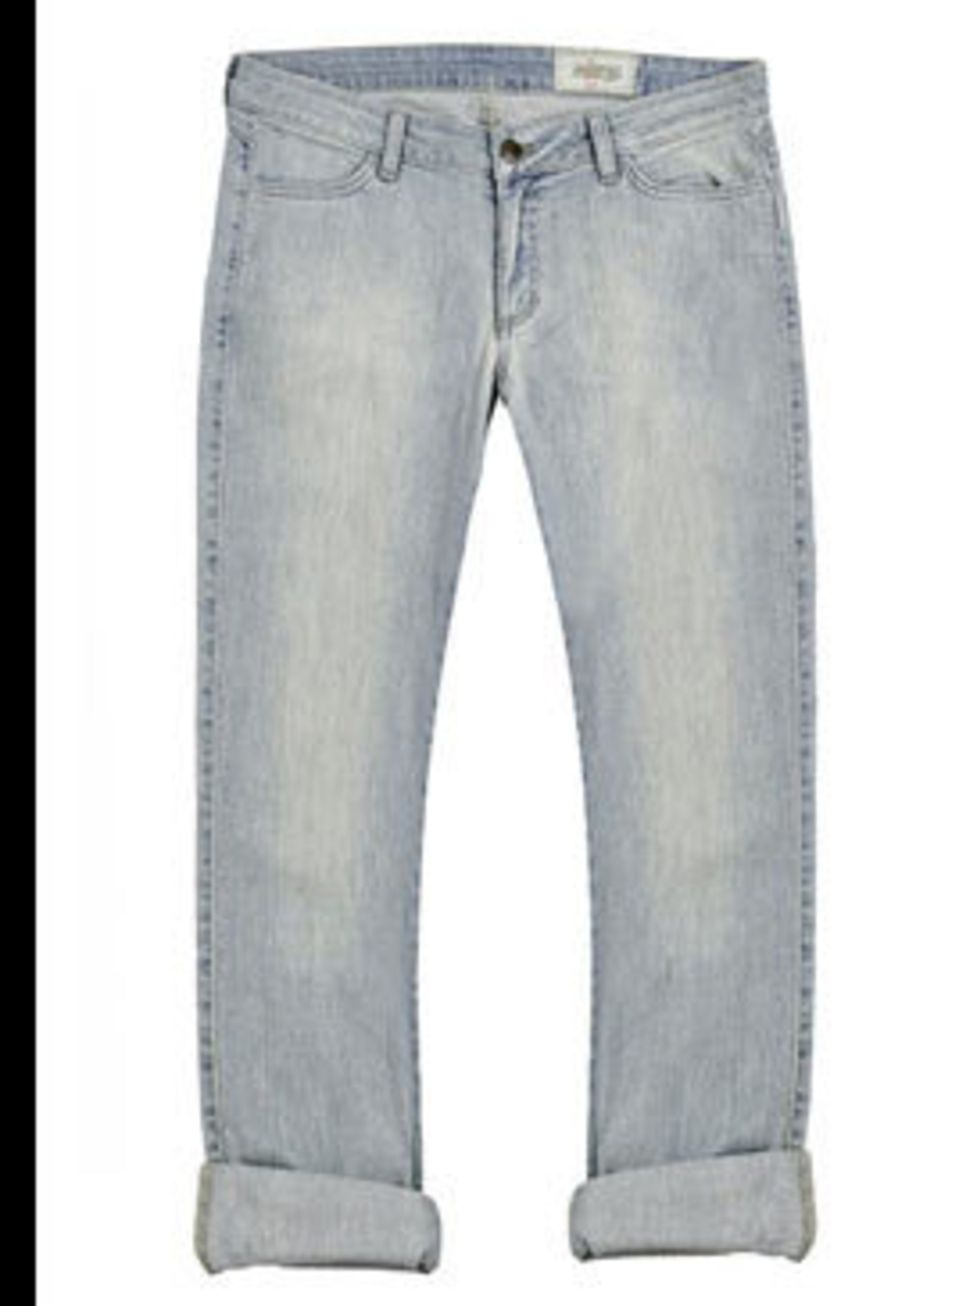 <p>Jeans, £150 by Siwy at <a href="http://www.bunnyhug.co.uk/fashionshop/gbu0-prodshow/Siwy_Alice_Lightwash_Relaxed_Fit_Boyfriend_Jean_in_Charm.html">Bunny Hug</a></p>